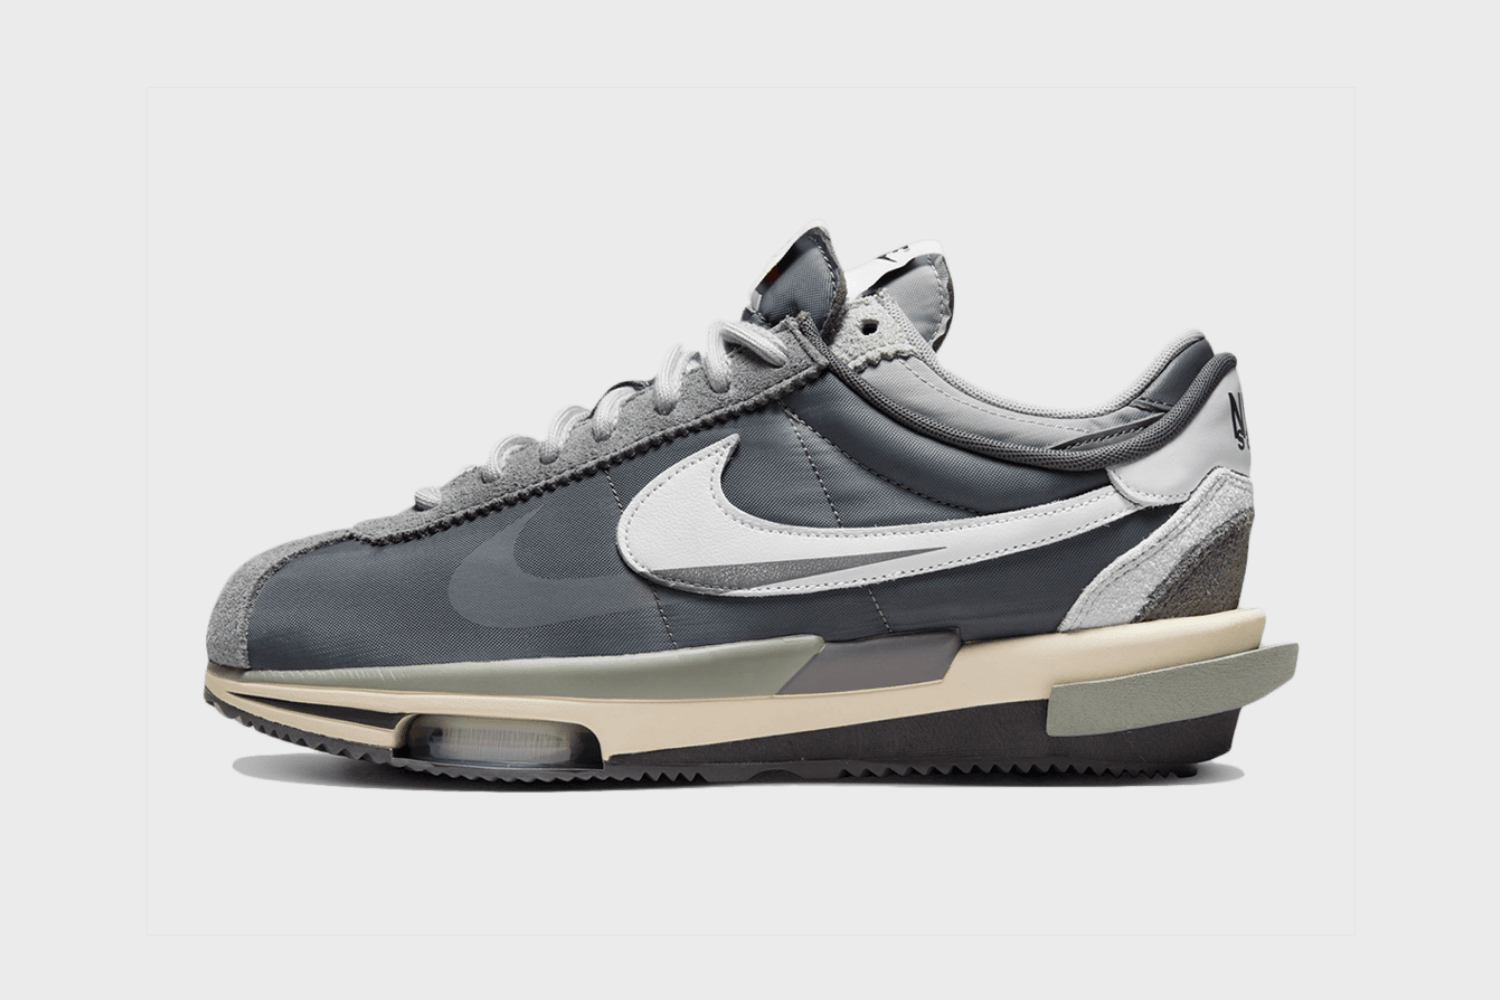 Sacai x Nike Cortez 4.0 dropt in 'Grey' colorway